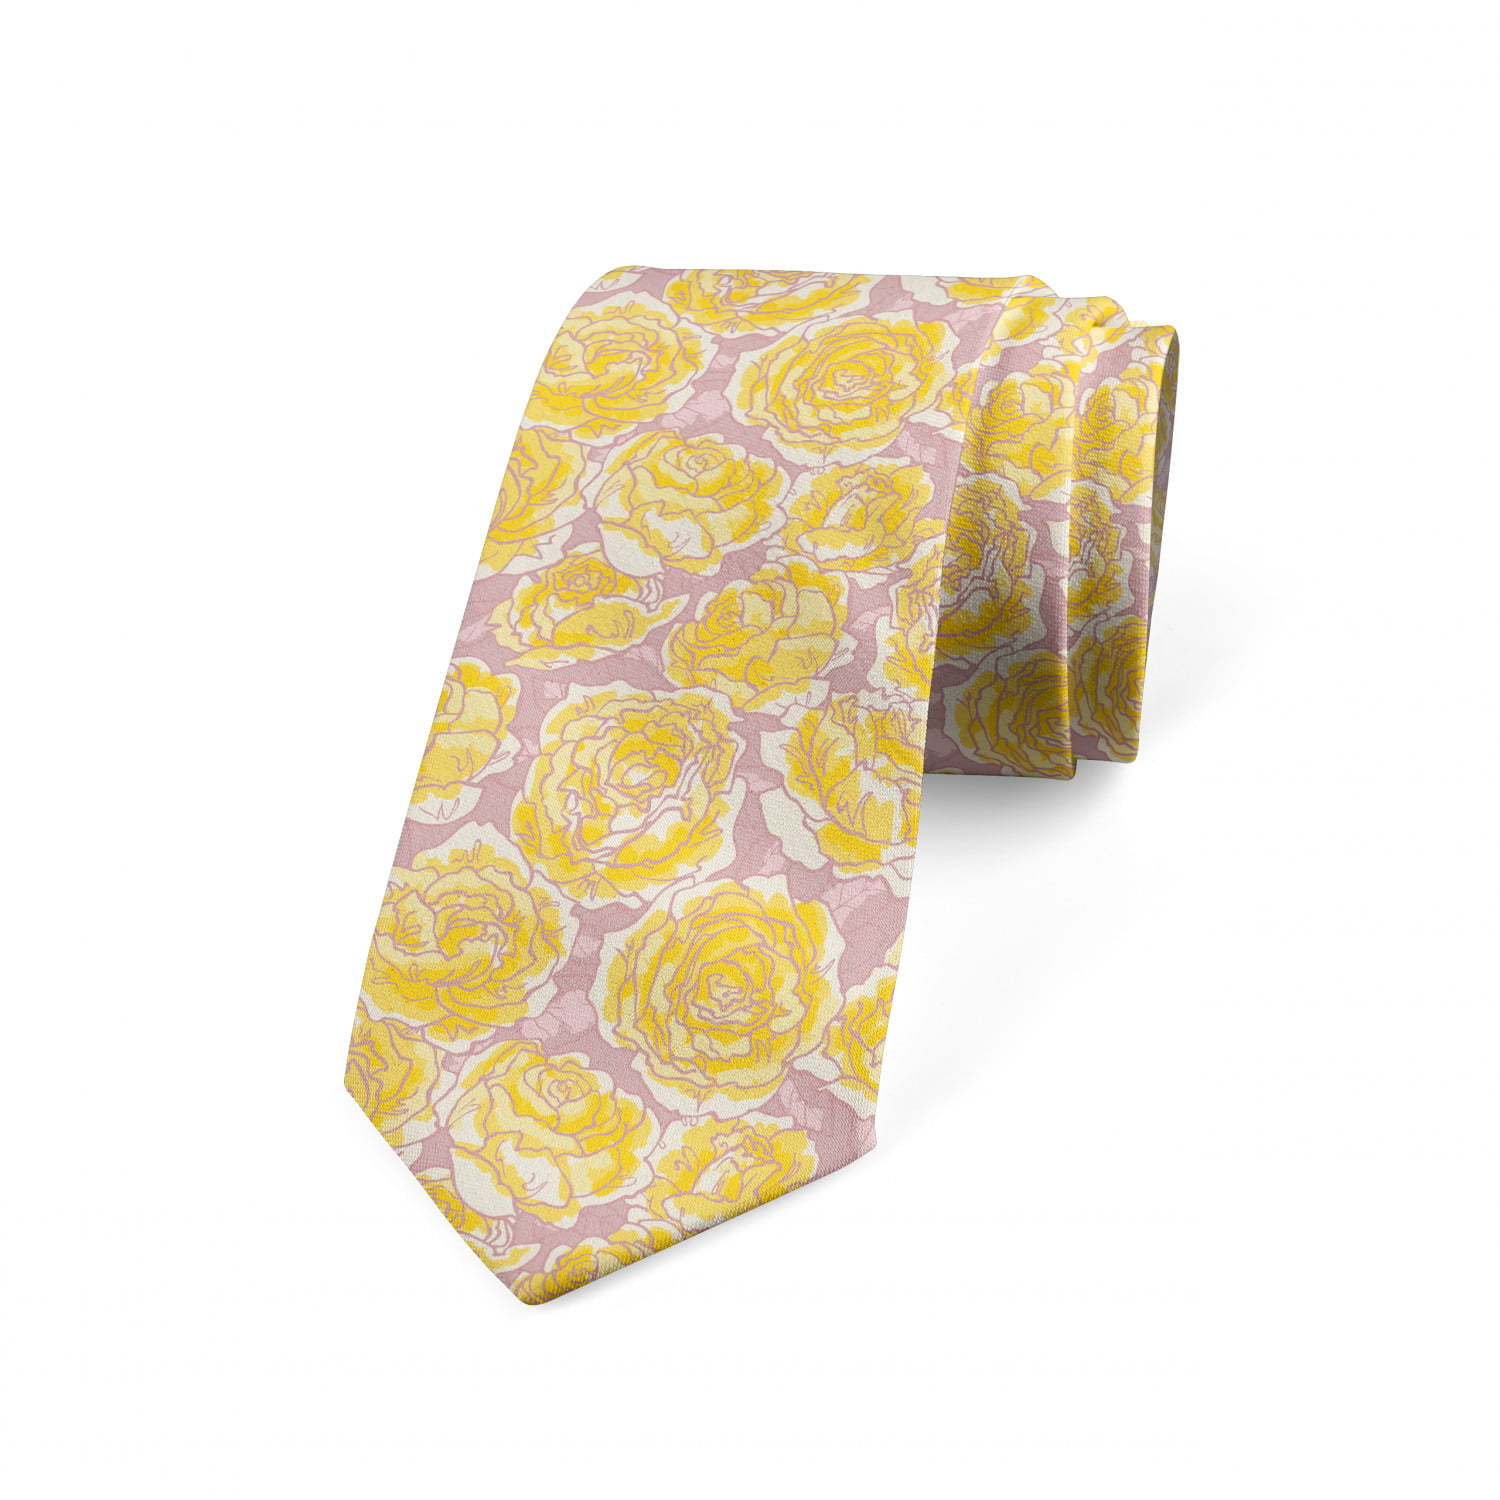 Flower Necktie, Yellow Roses Blooming, Dress Tie, 3.7